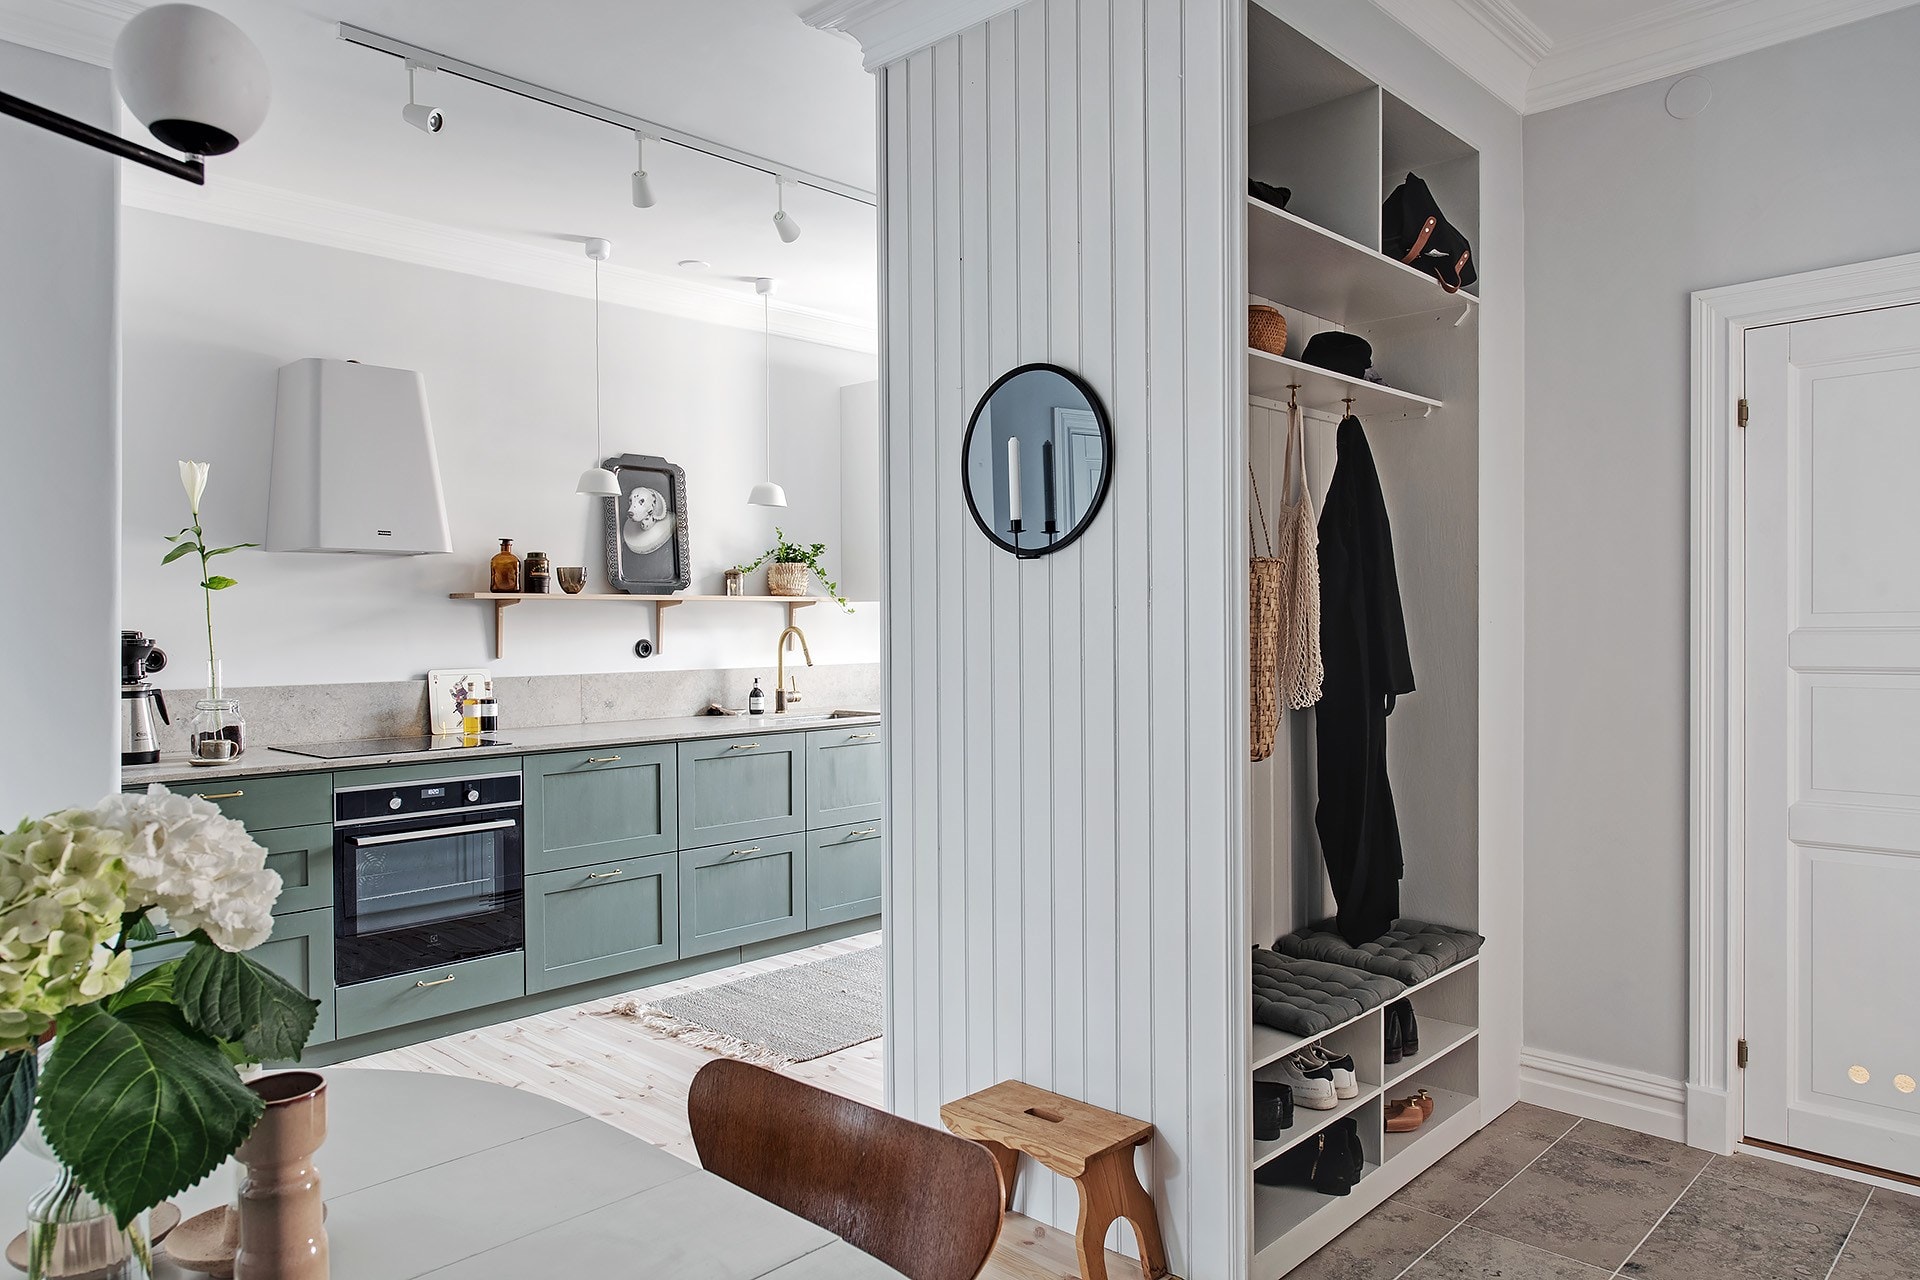 27 inspiring living rooms with beige walls - COCO LAPINE DESIGNCOCO LAPINE  DESIGN